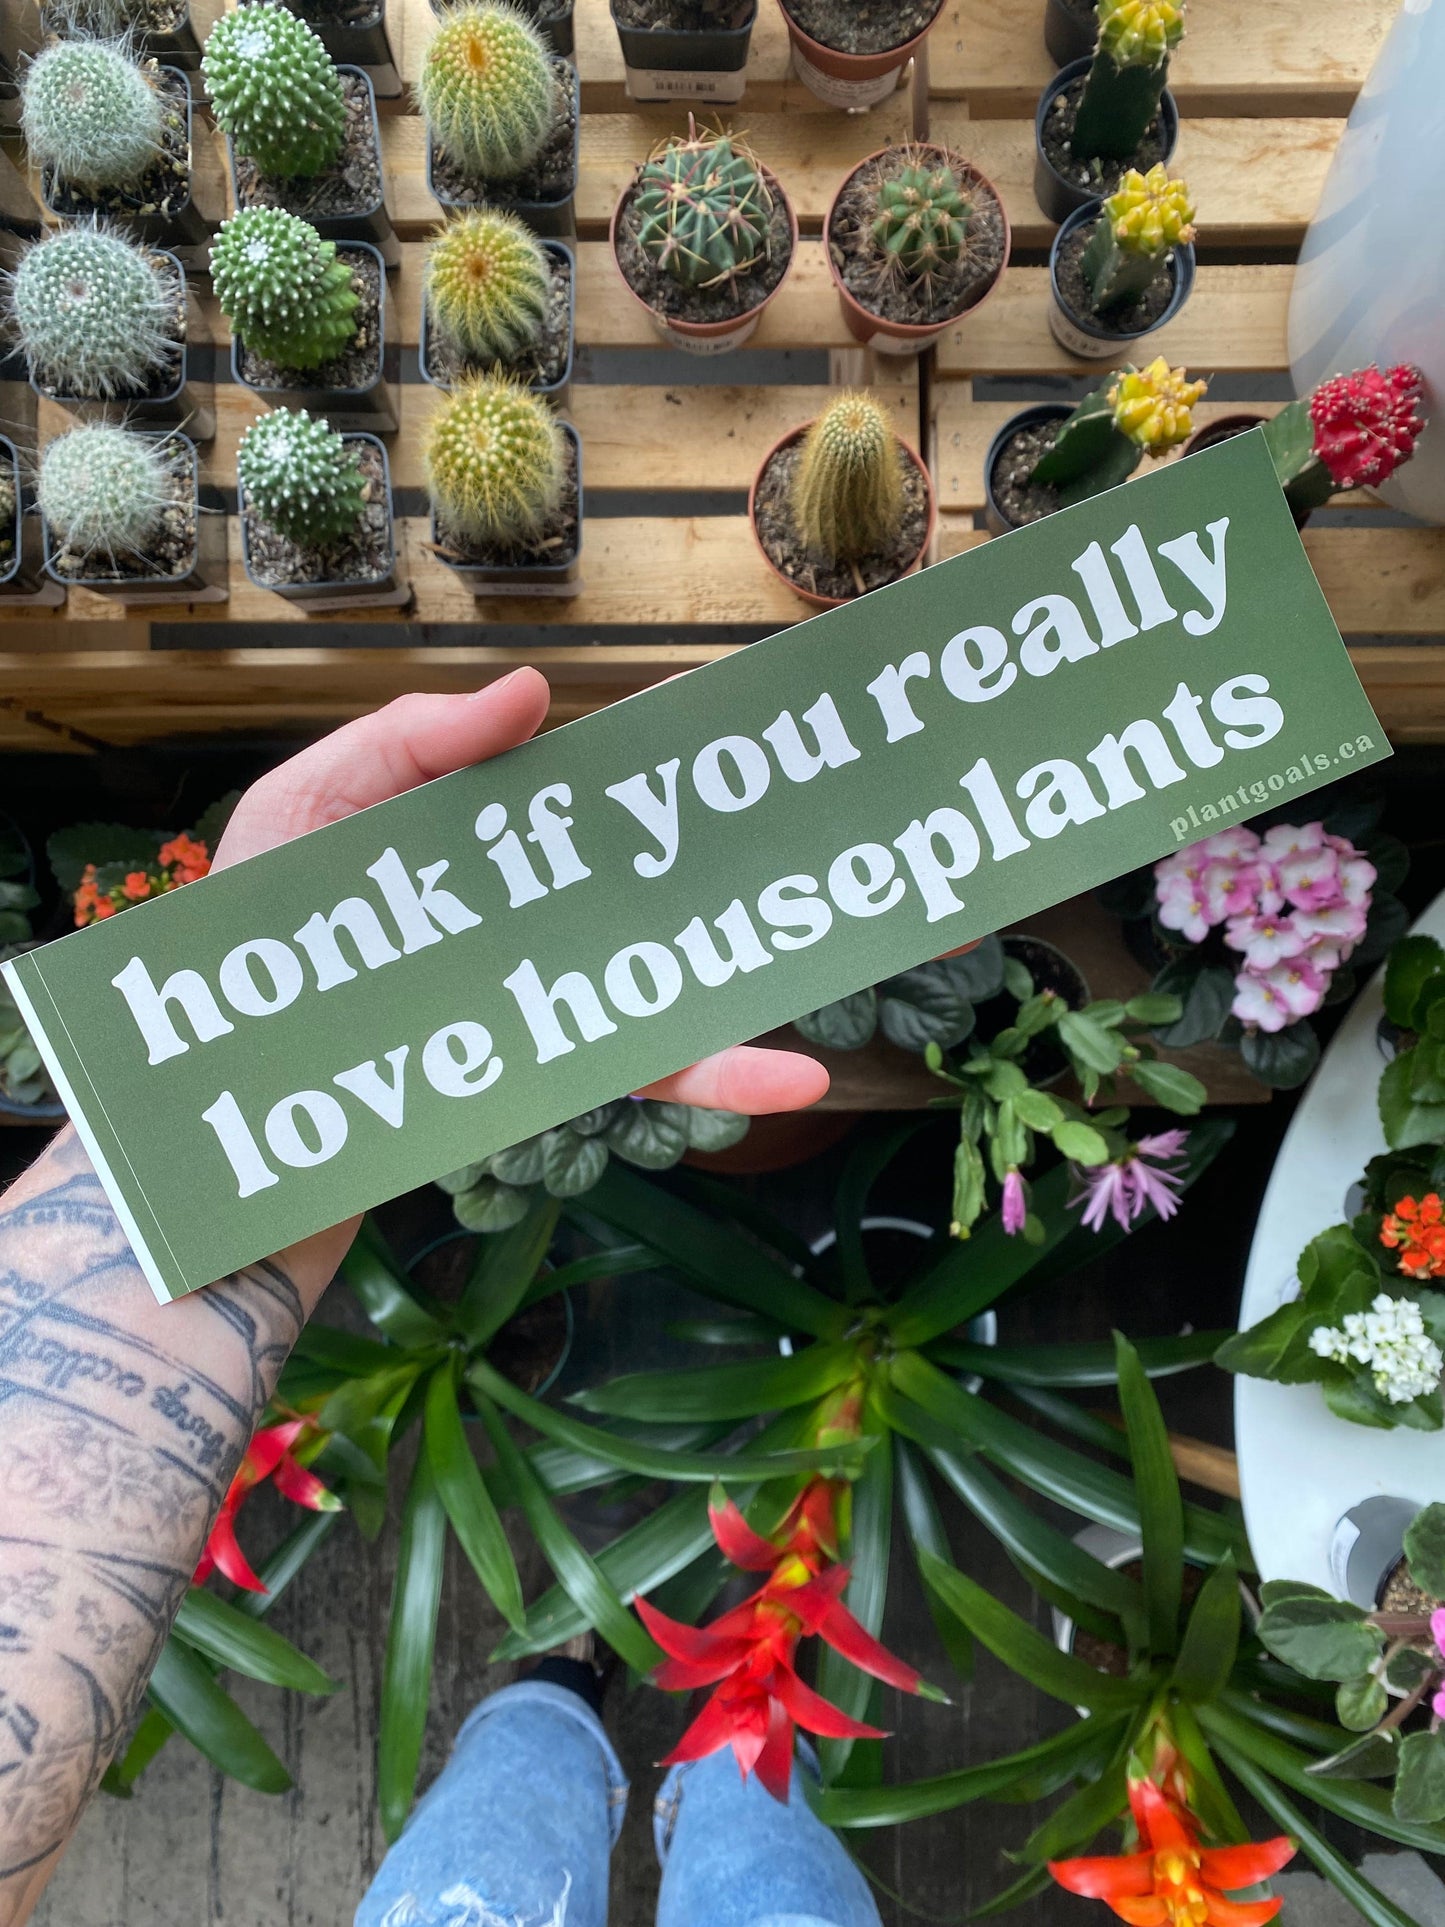 Plant Goals Plant Shop Honk If You Really Love Houseplants Bumper Sticker